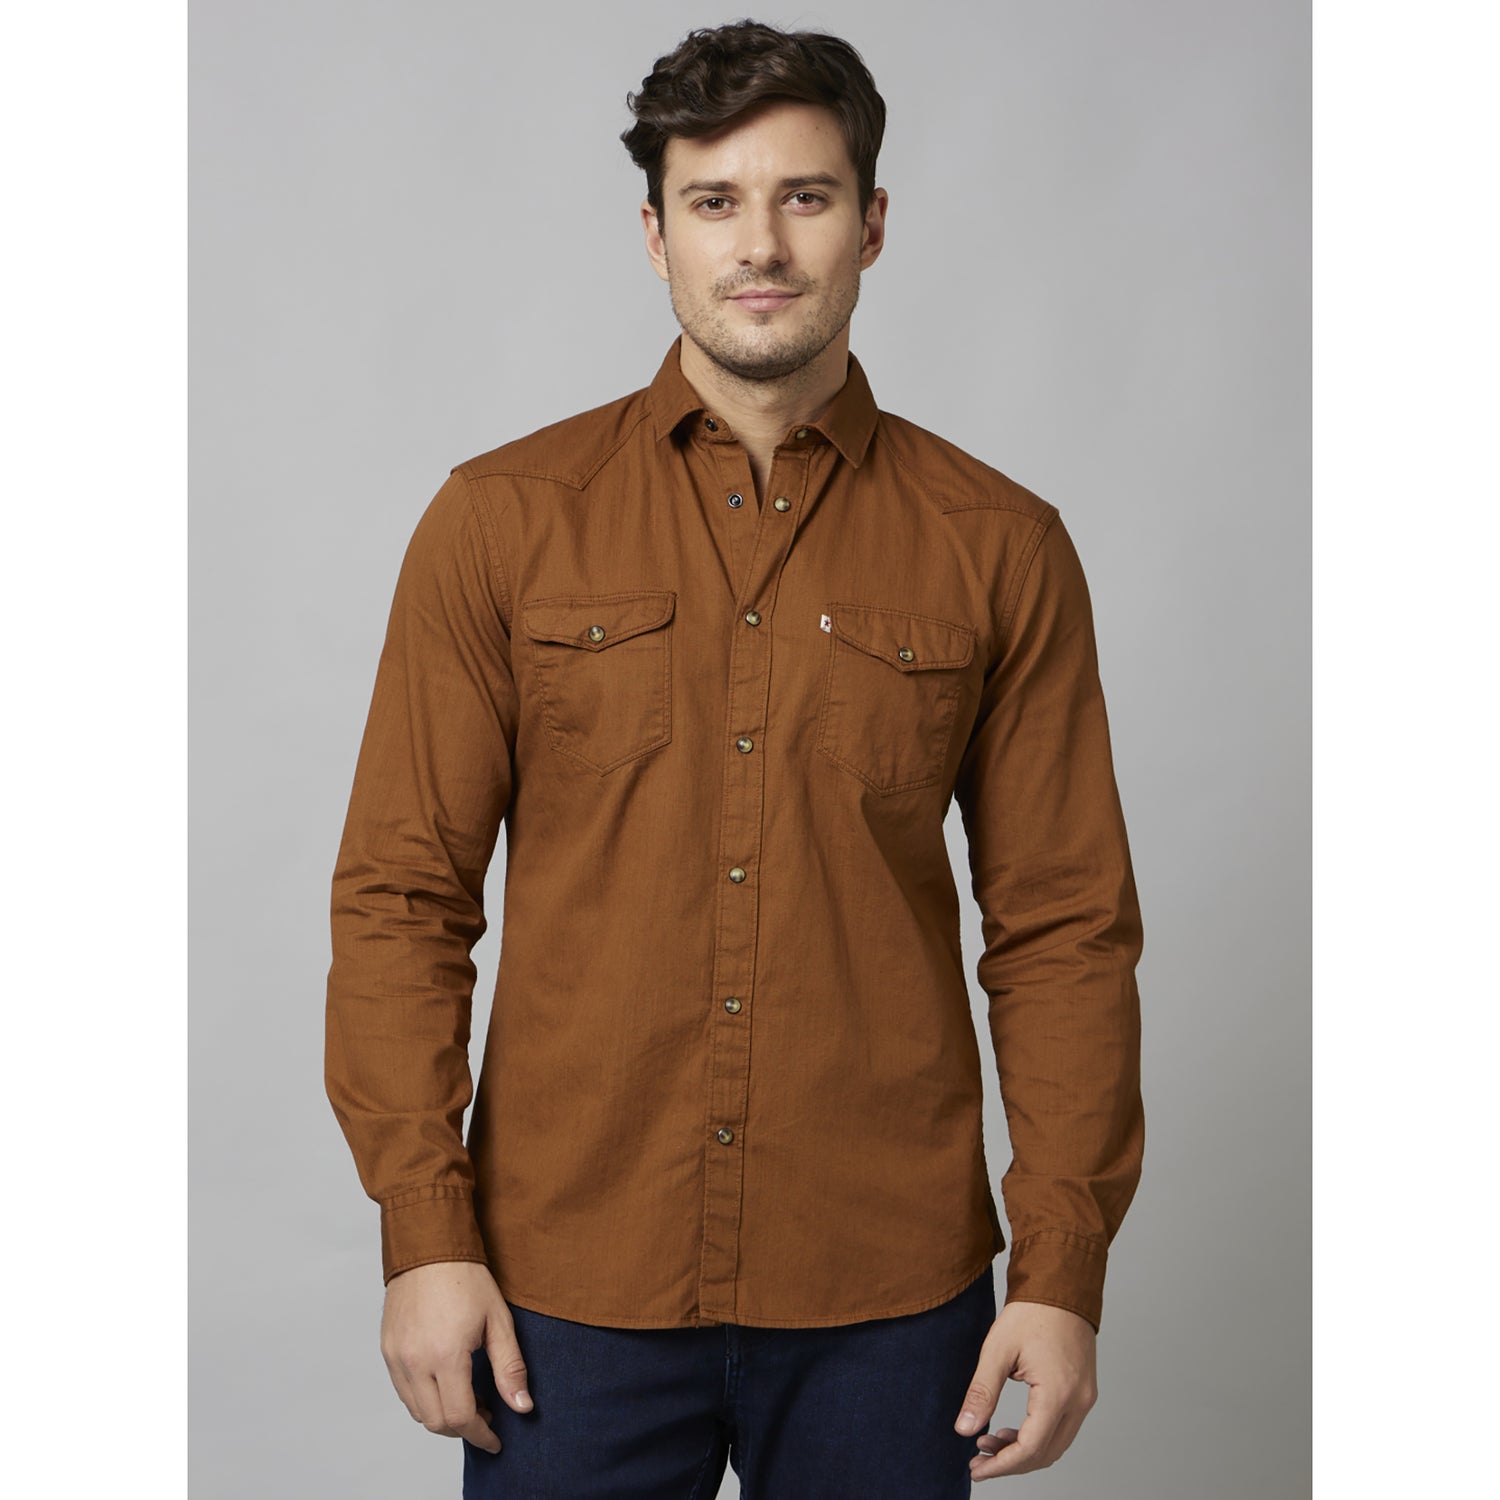 Rust Solid Full Sleeve Cotton Shirts (BASUN)